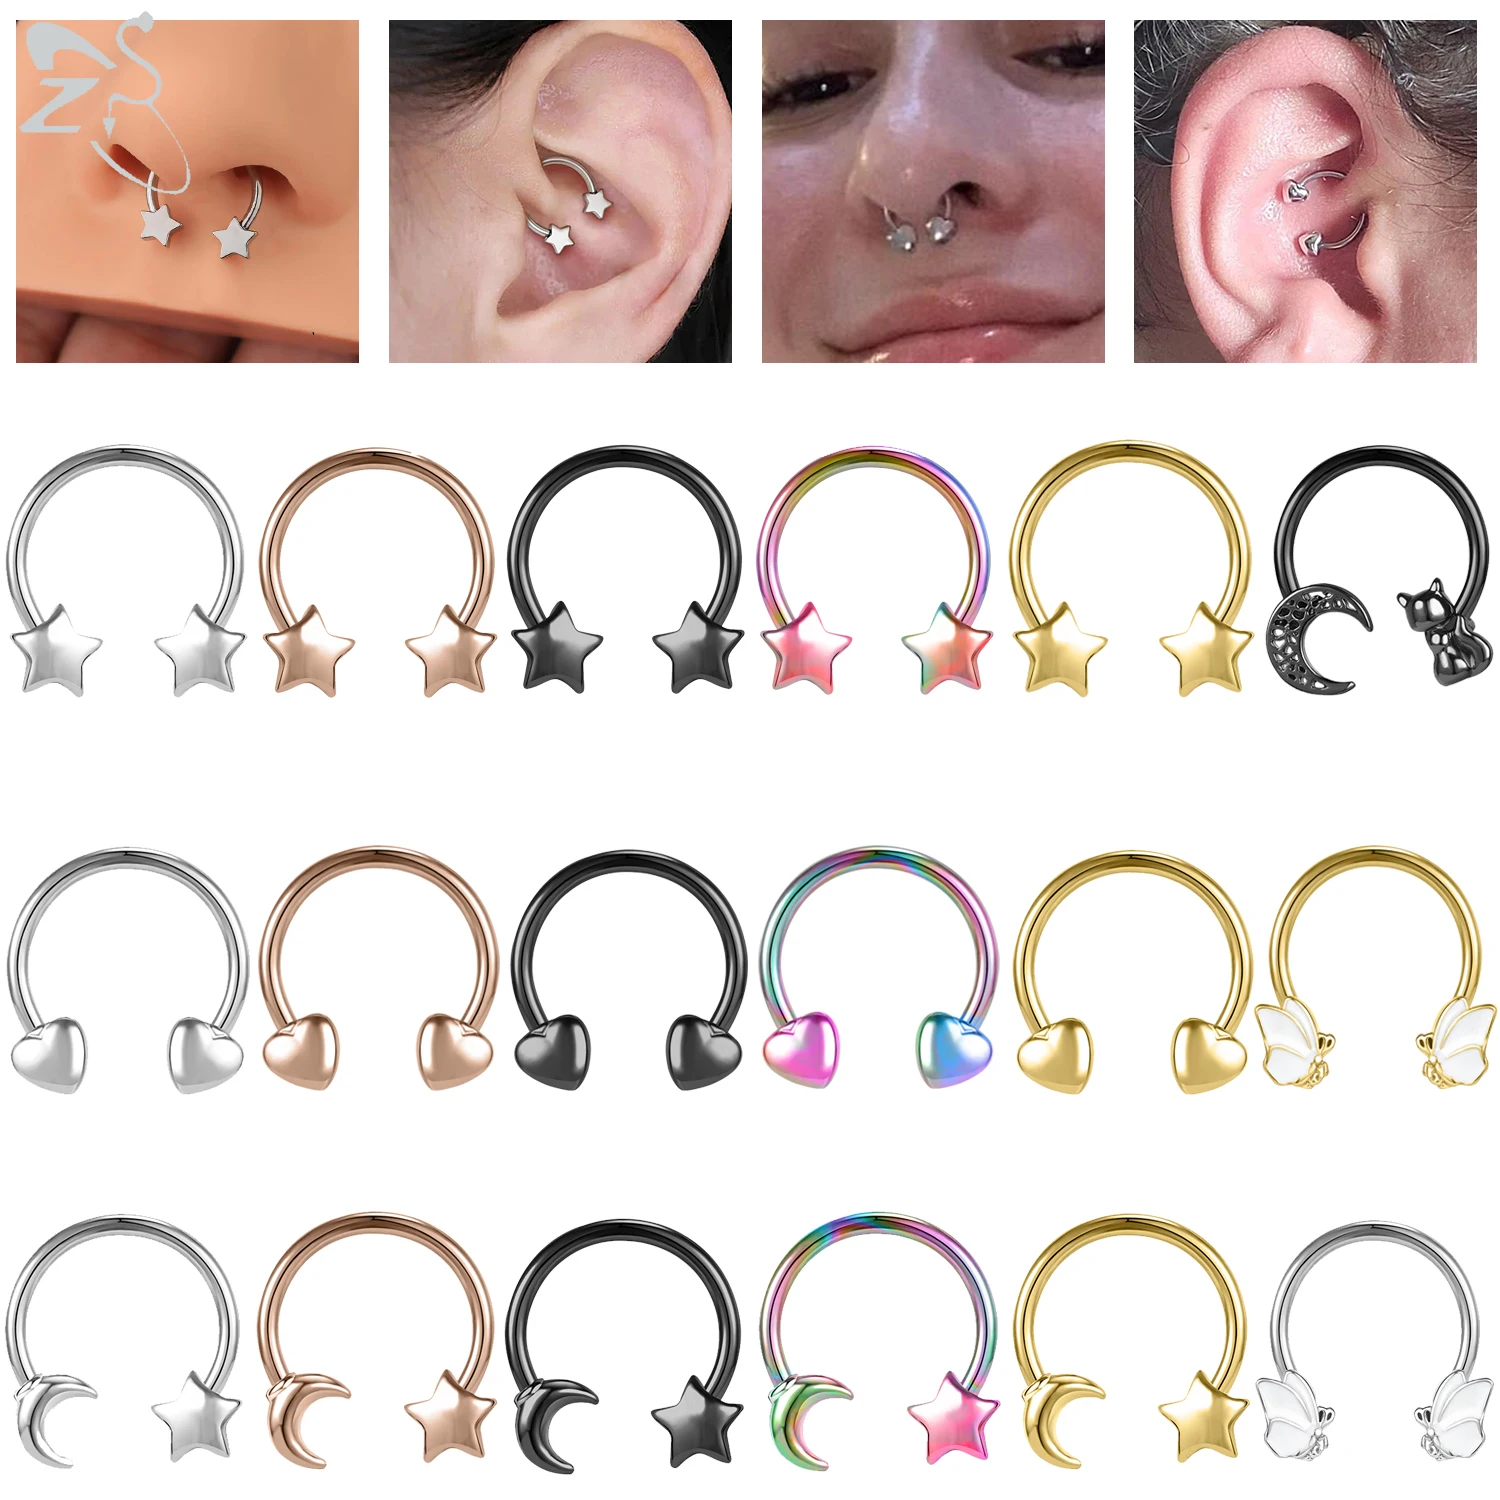 

ZS 1PC 16G Star Heart Septum Ring Stainless Steel Nose Piercing Circular Barbell Cartilage Earring Tragus Helix Hoop Piercings